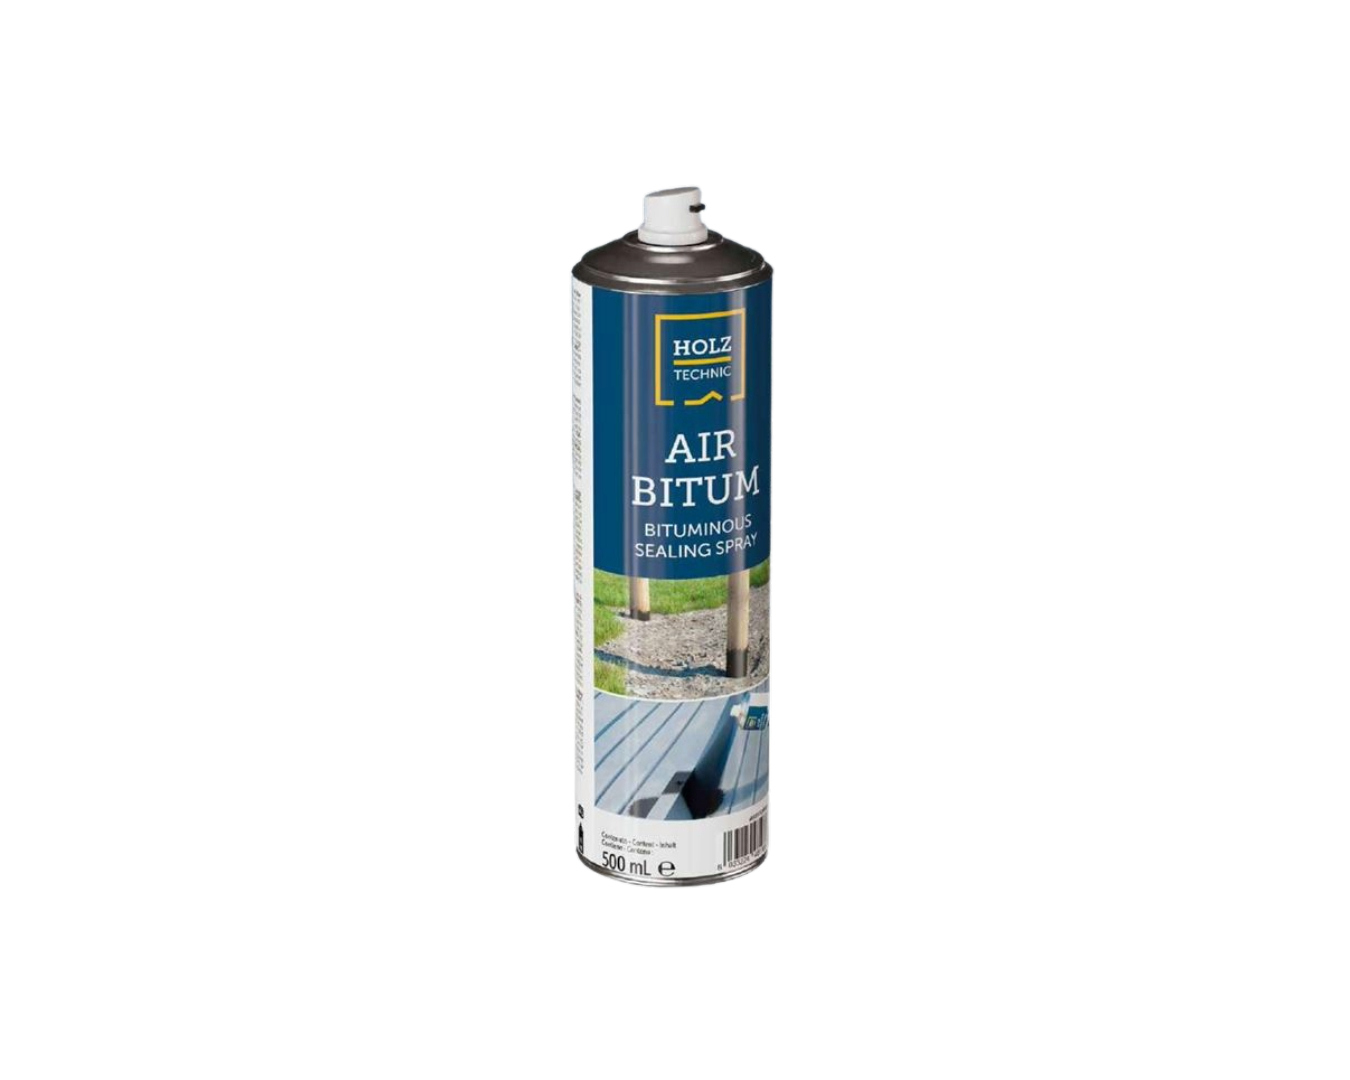 AIR BITUM - Bitumenspray - Jotun - Onlineshop